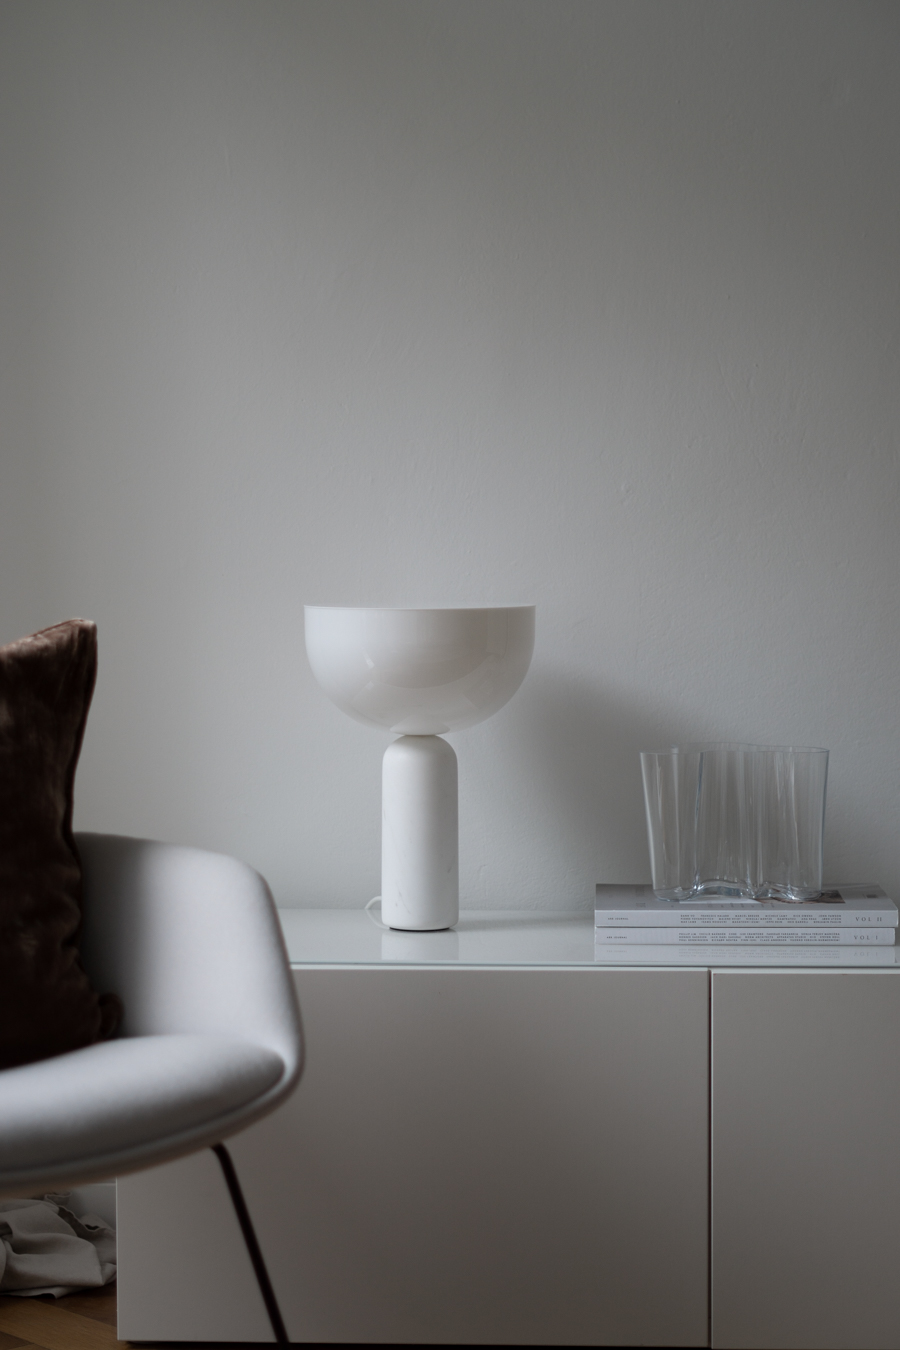 New Works Kizu Lamp, Aalto Savoy Vase, Neutral Interior Aesthetic, Danish Design